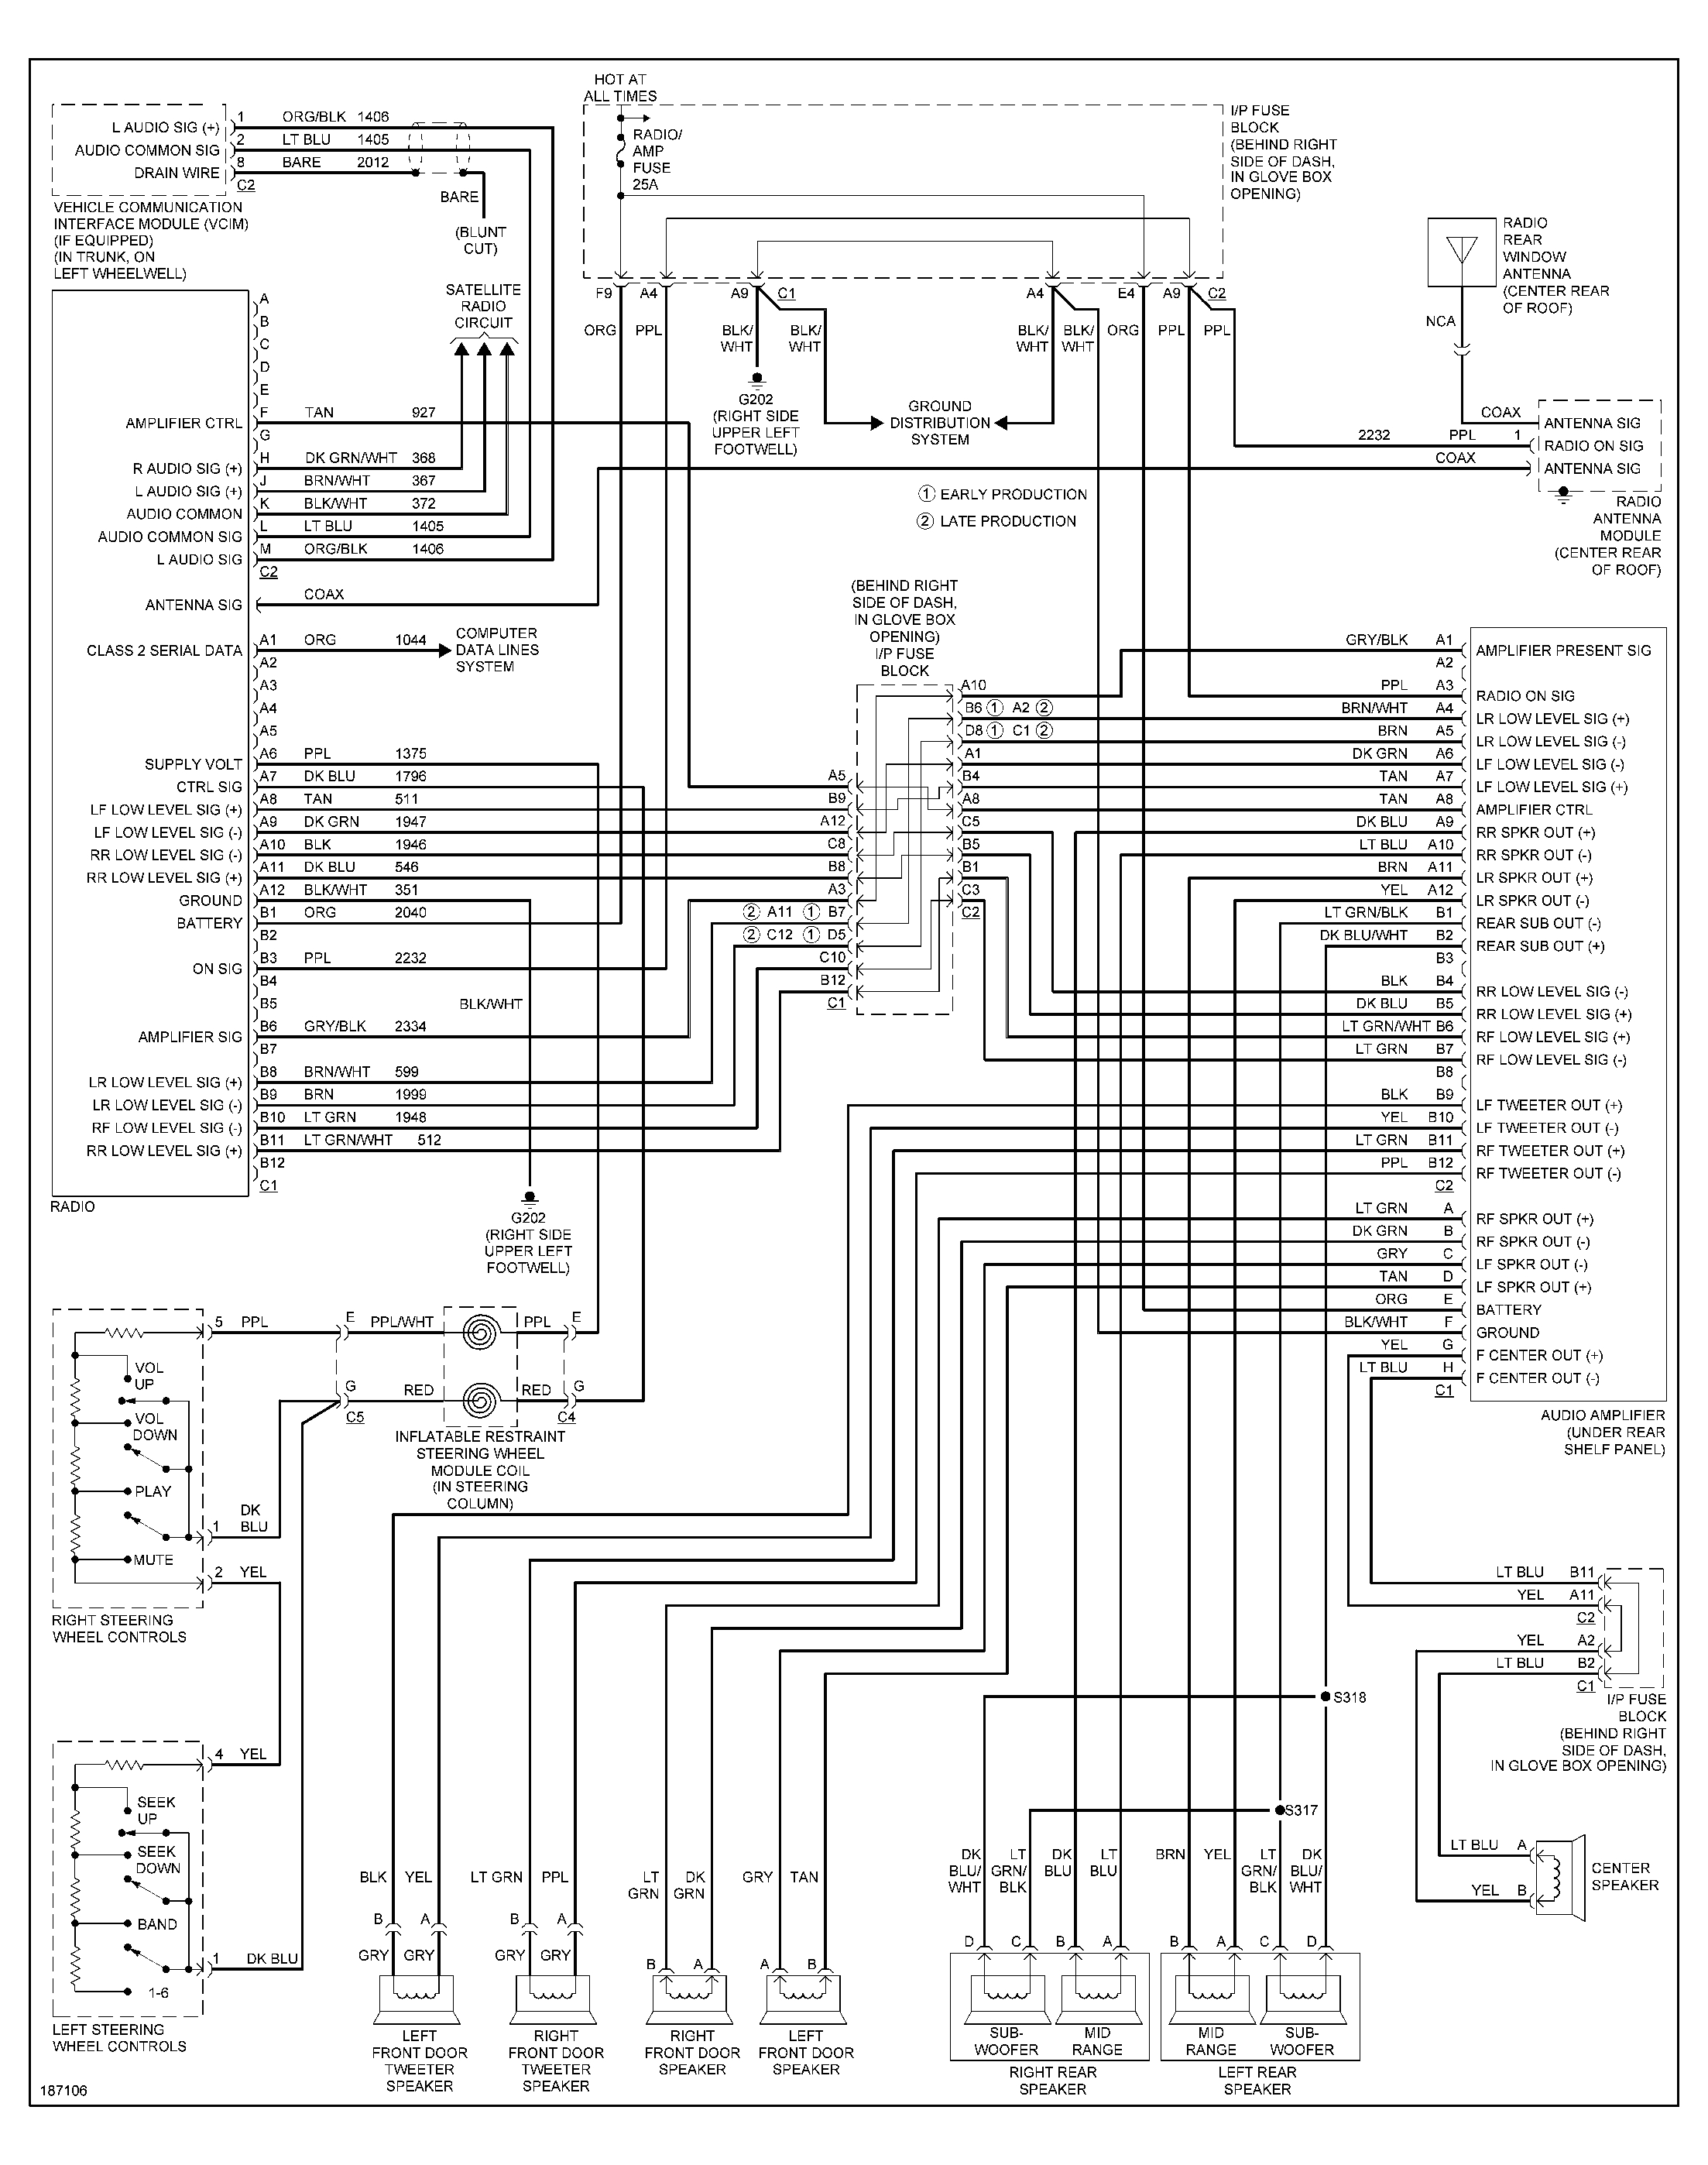 1987 pontiac grand am ignition wiring diagram wiring diagram pagewiring diagram for 2004 pontiac grand am